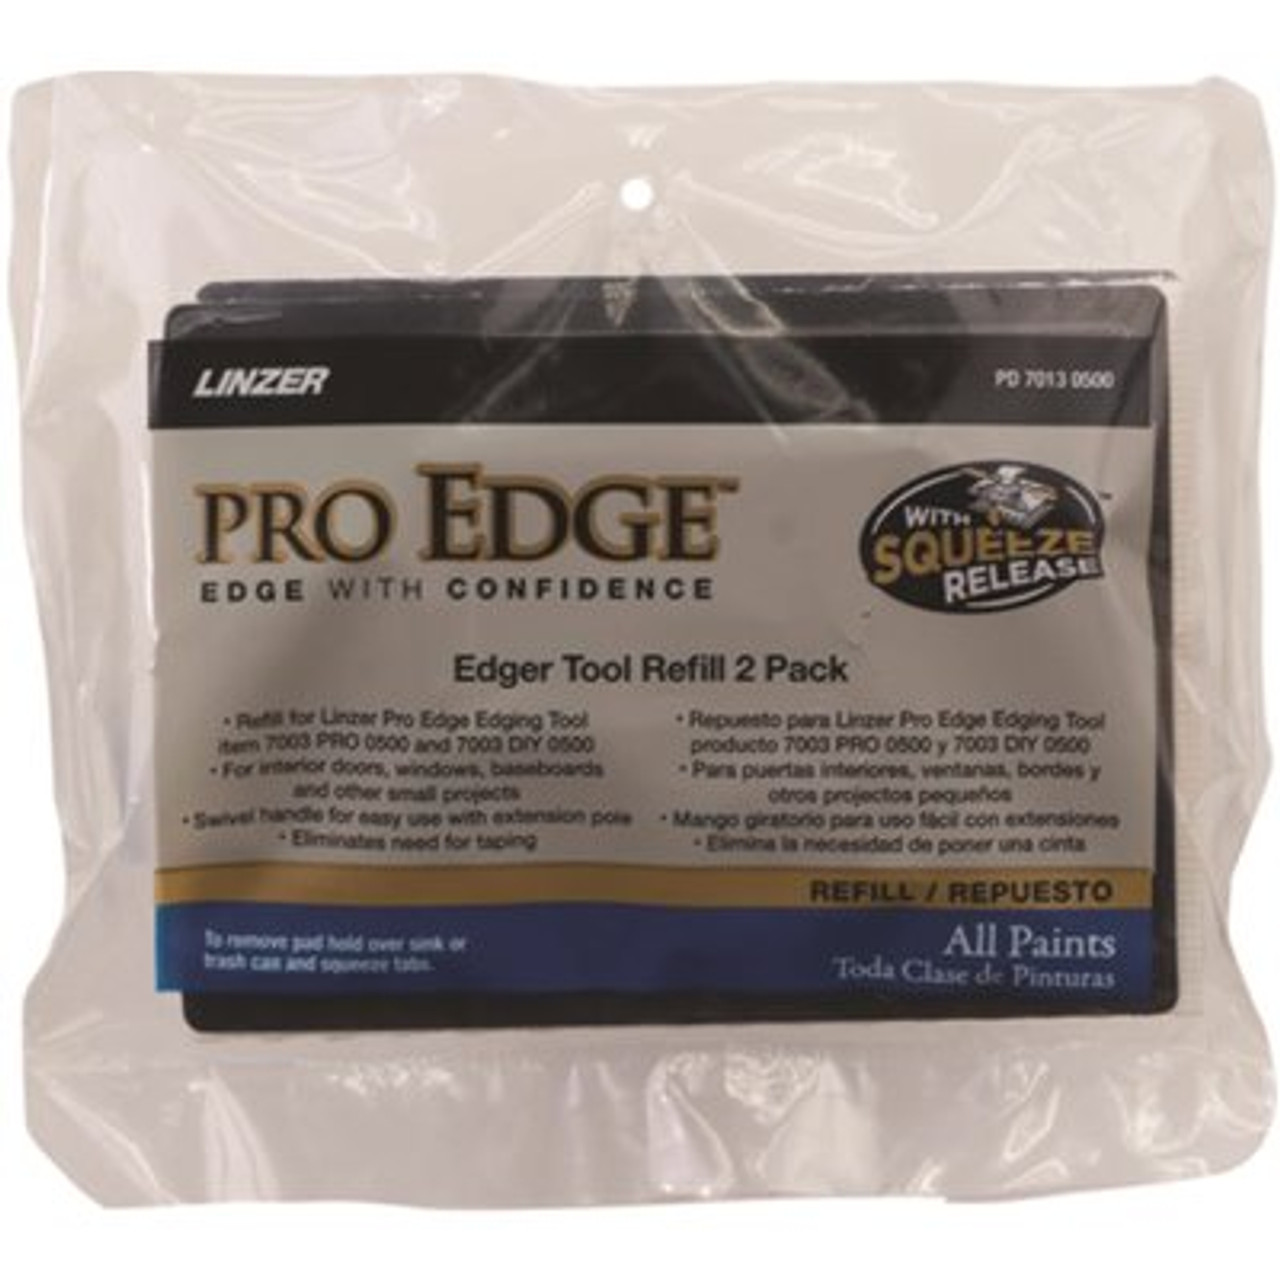 Pro Edge 5 in. Edger Refill